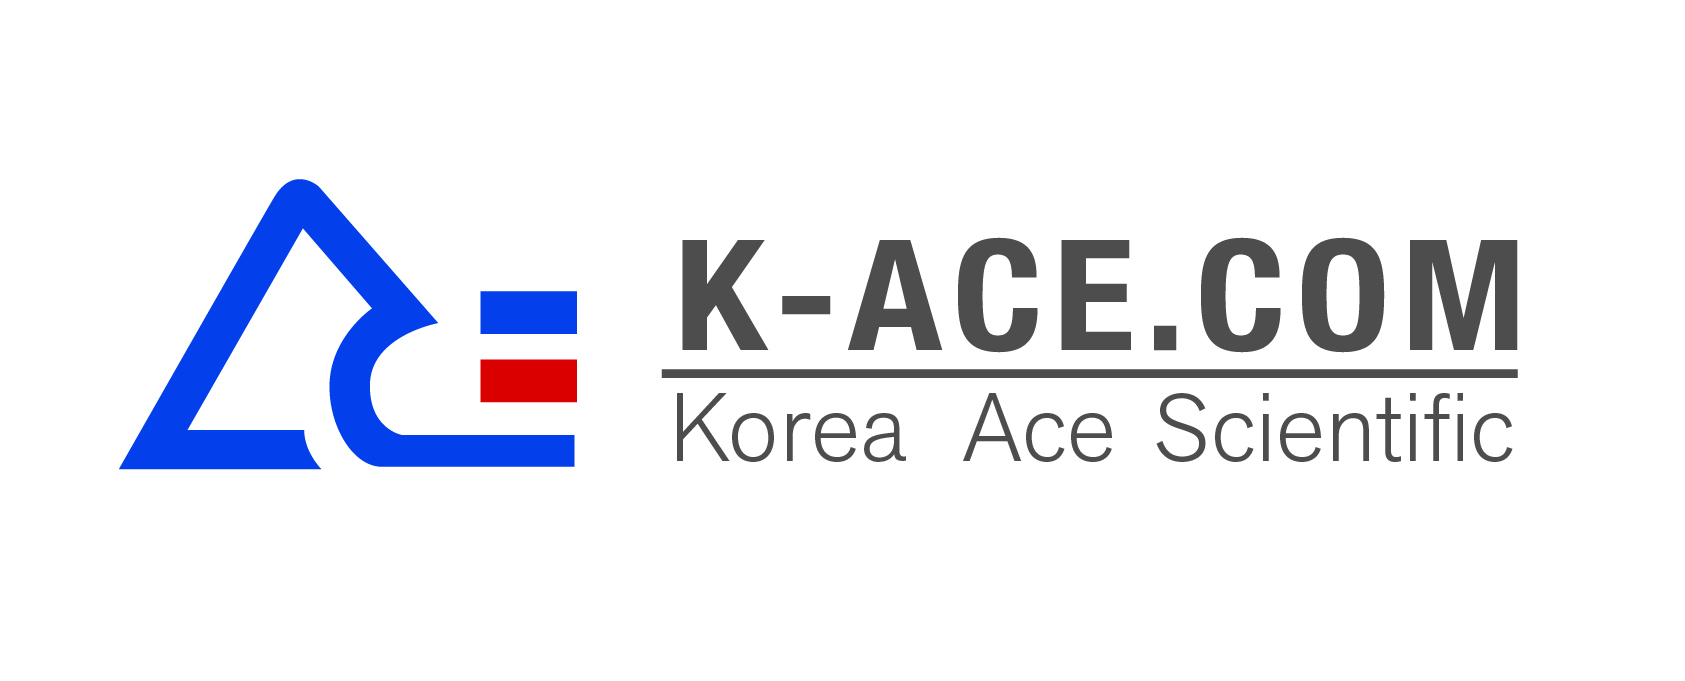 images/articles/categories/korea_ace_logo.jpg